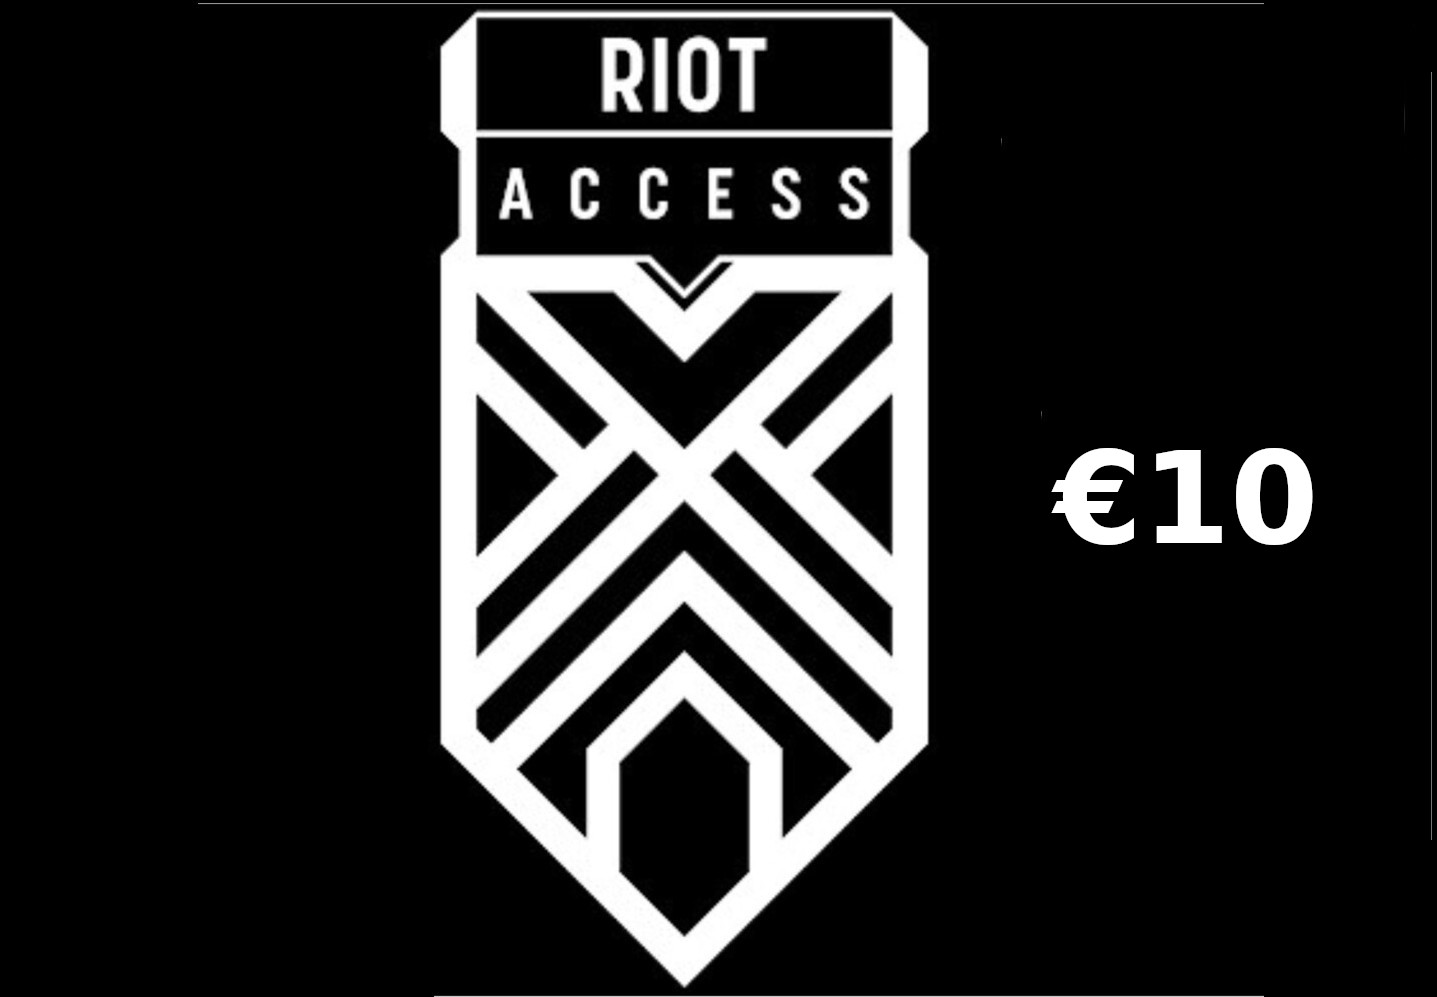 Riot Access €10 Code EU